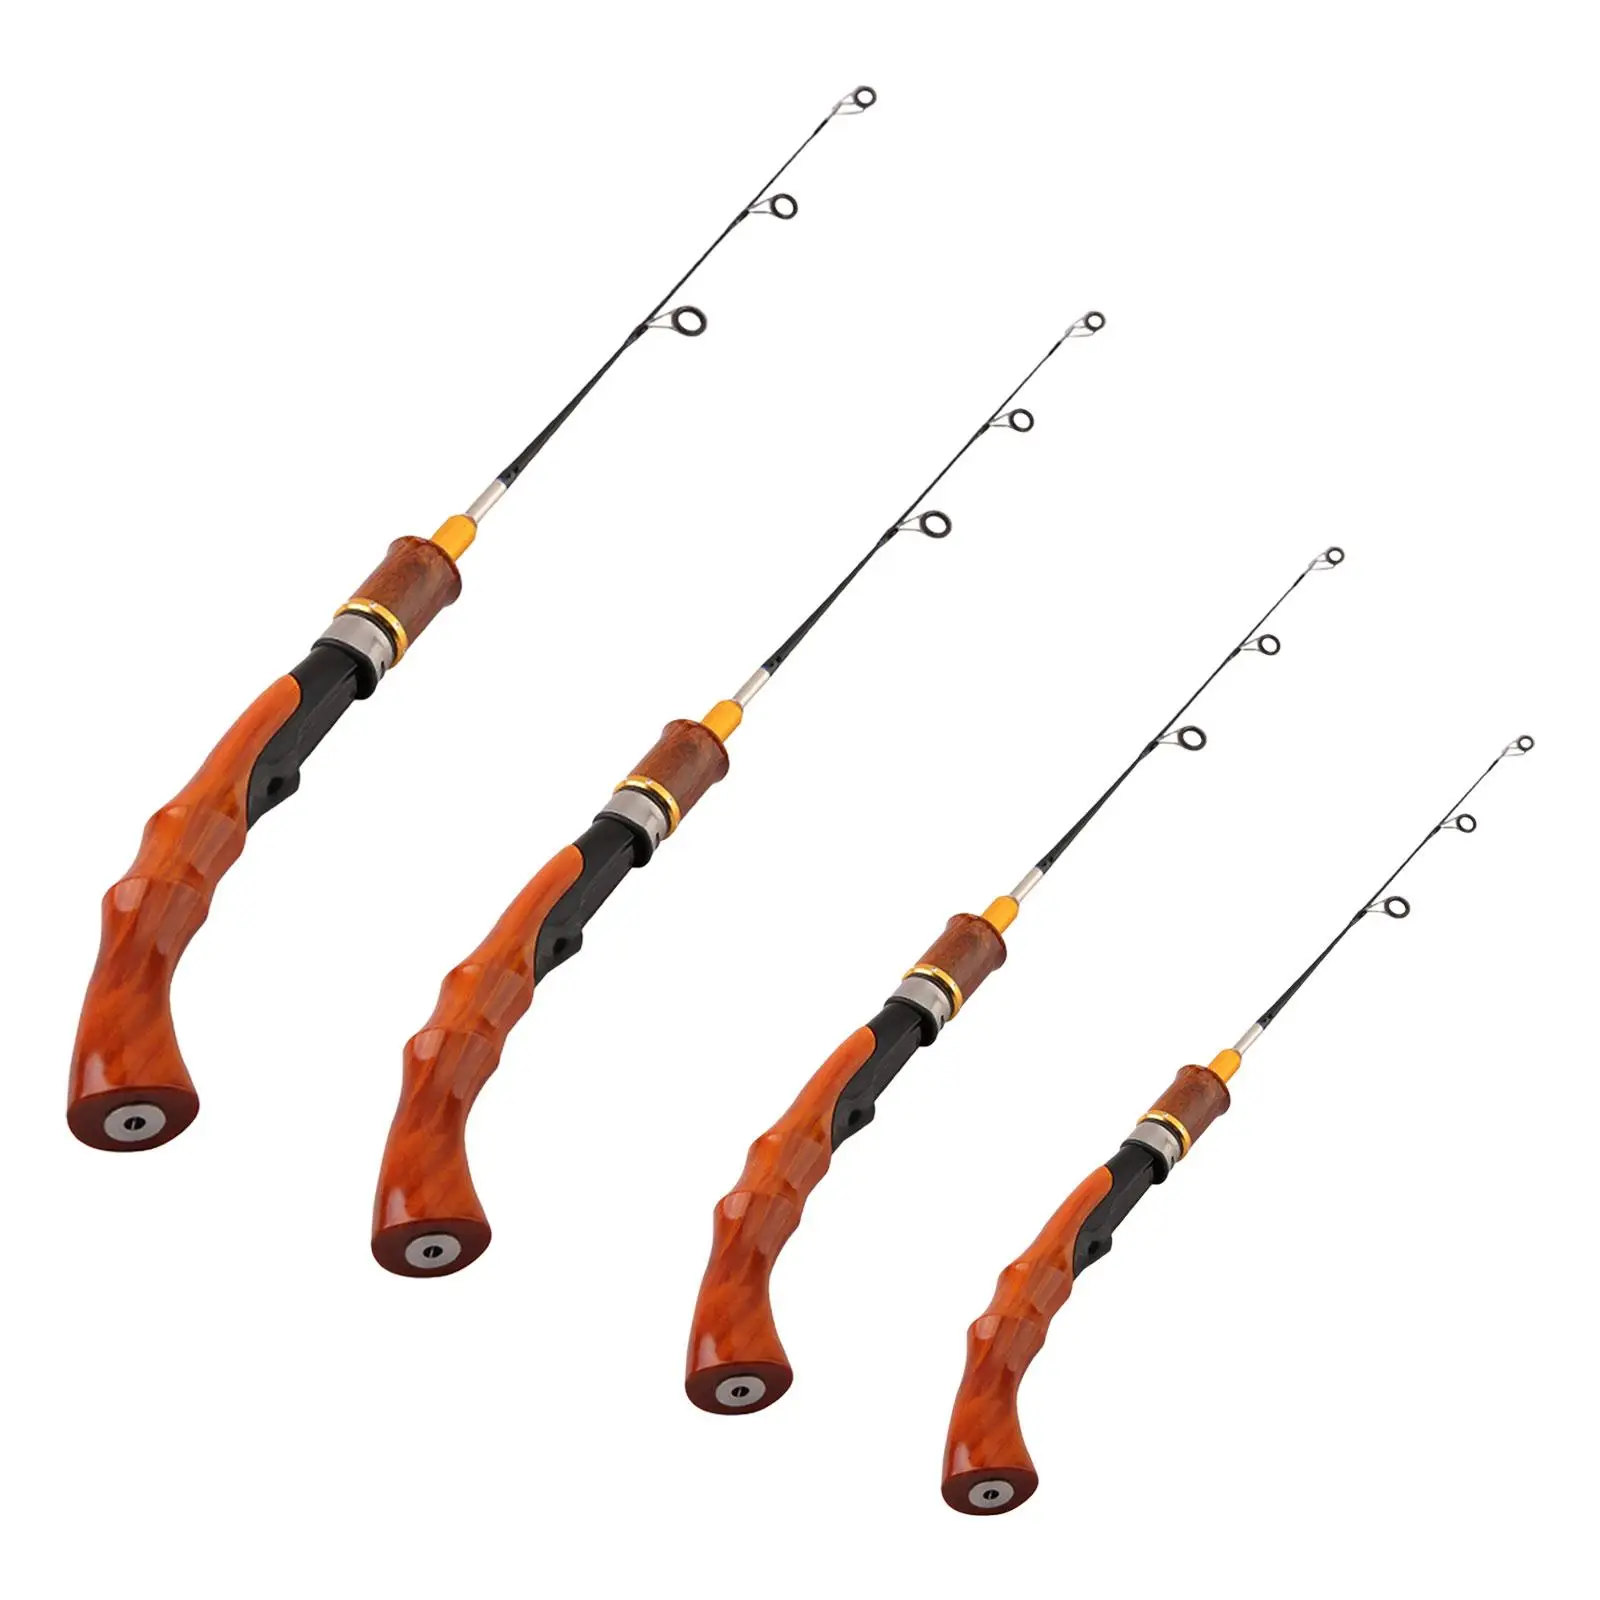 Portable Ice Fishing Rods Fish Rod Ice Fishing Pole for Inshore Fishing